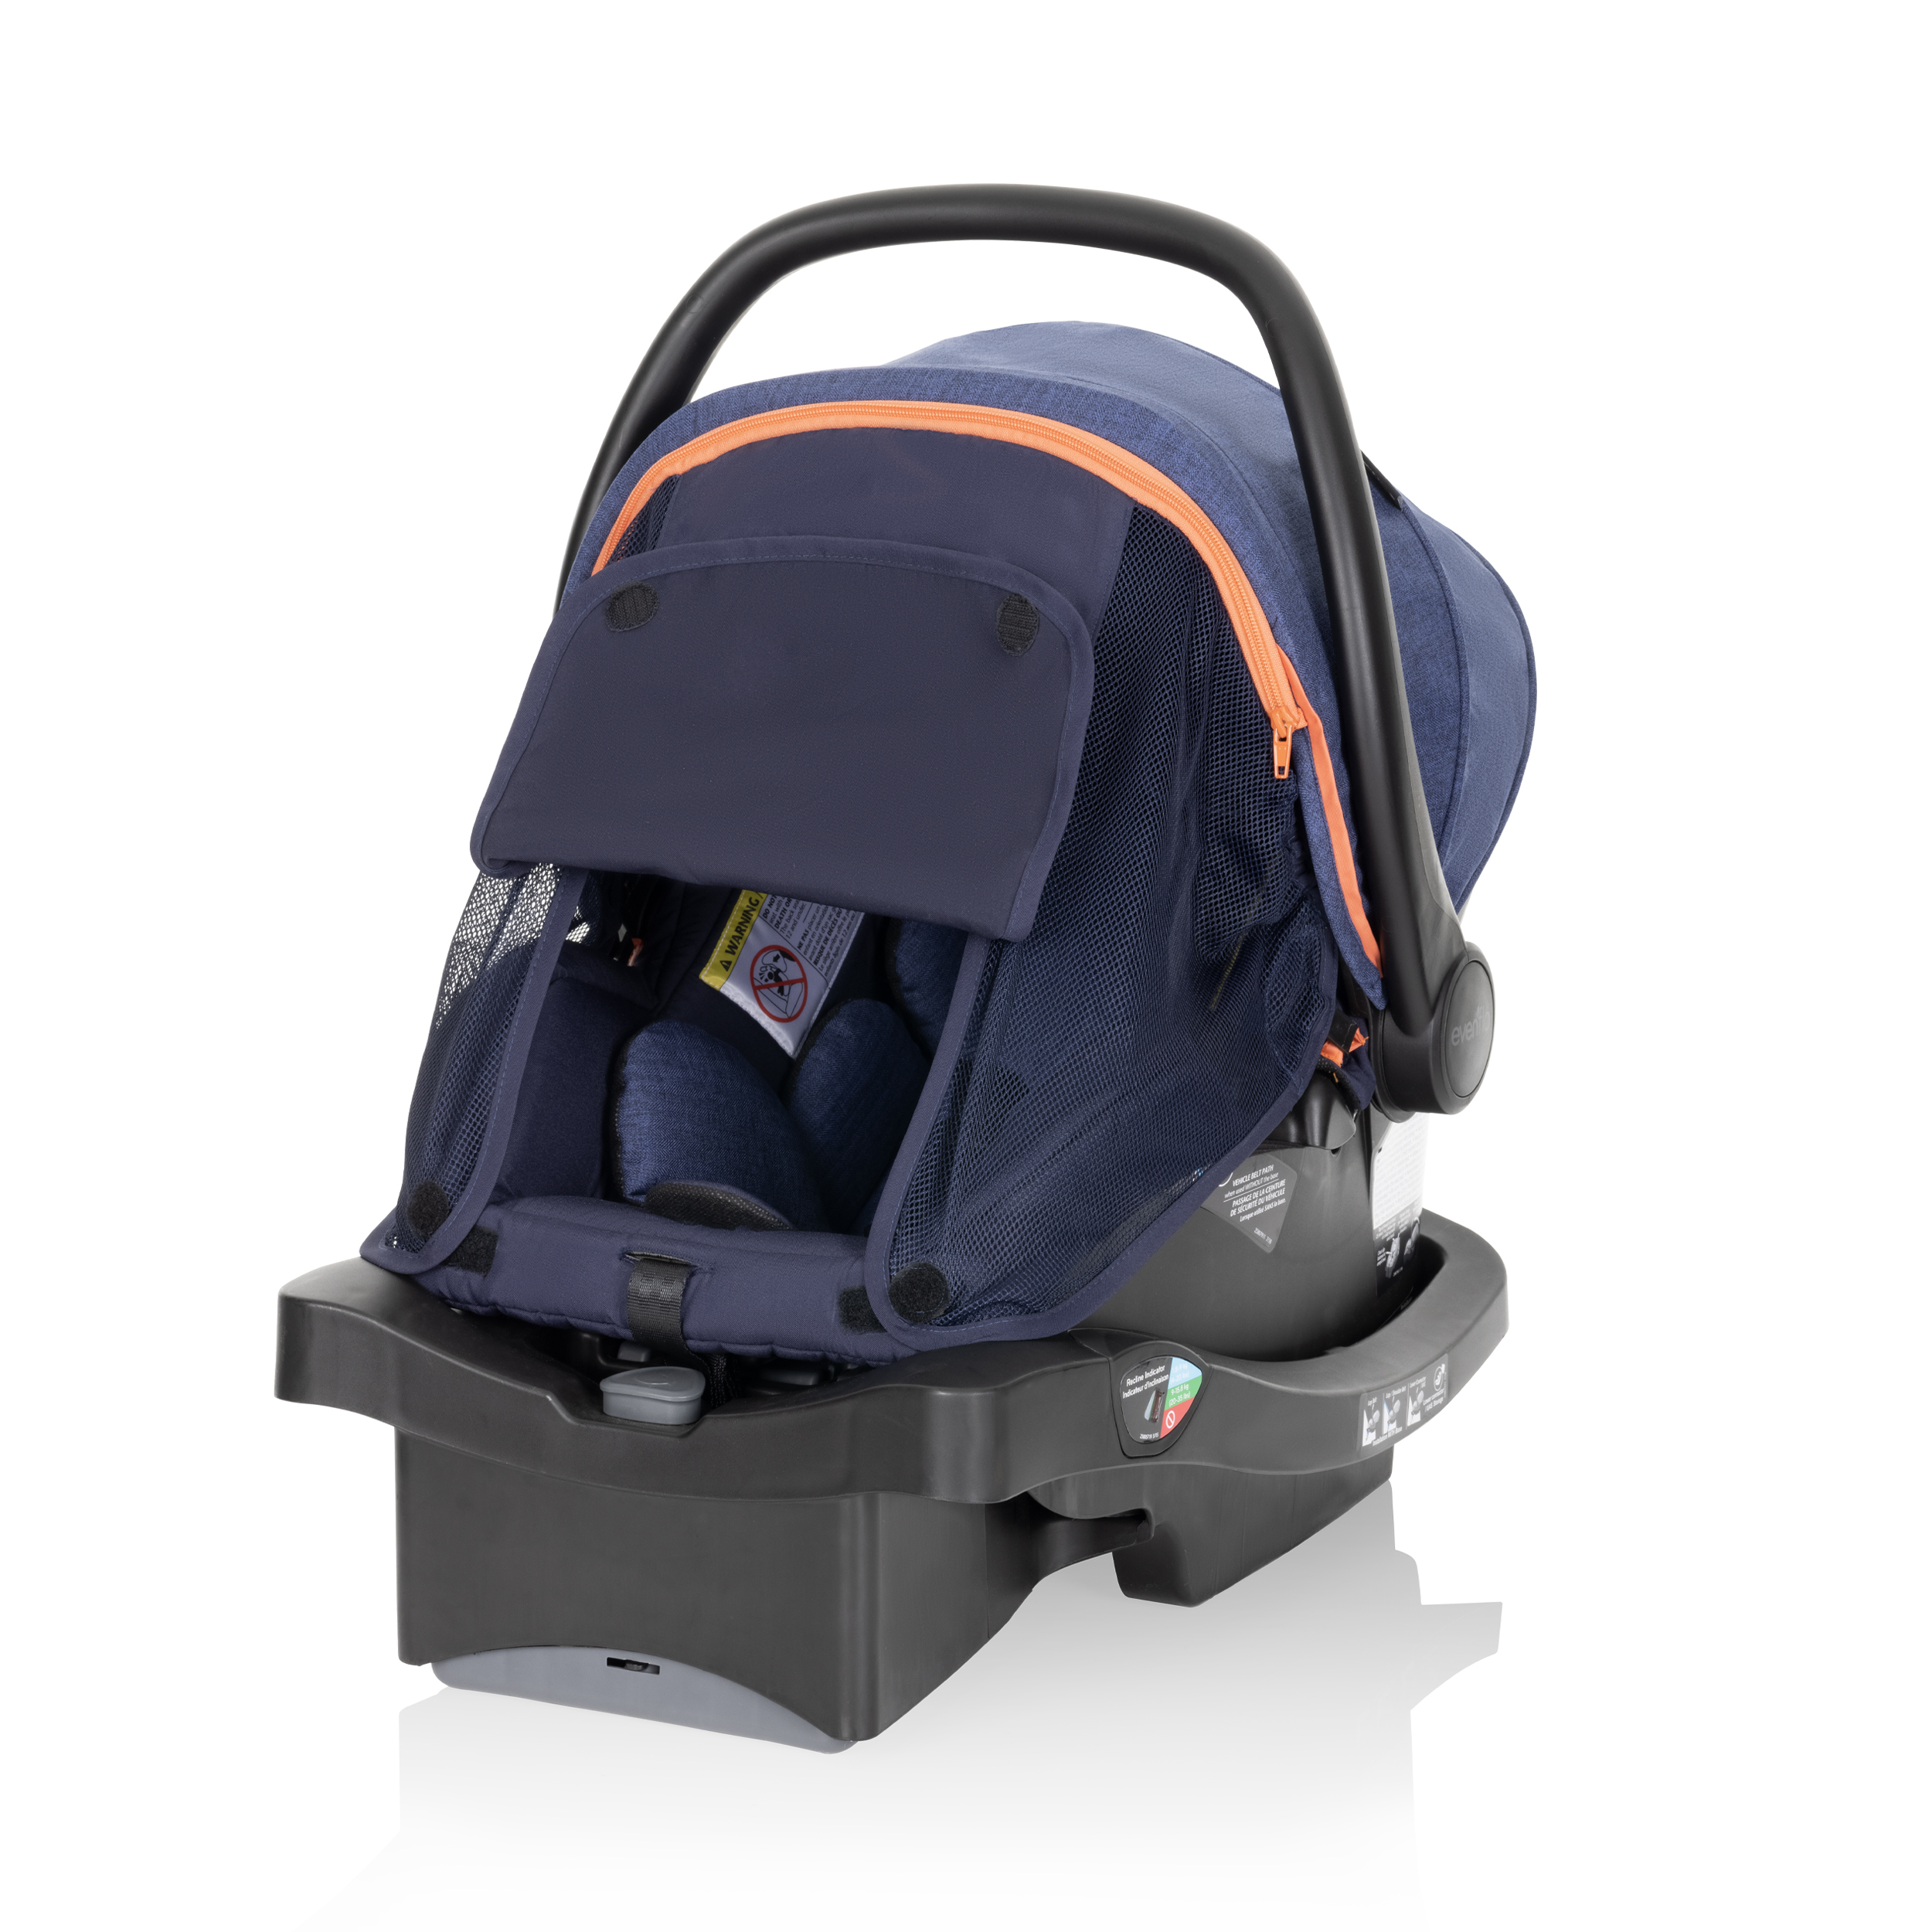 Pivot Vizor Travel System with LiteMax Infant Car Seat (Promenade Blue) - image 3 of 6